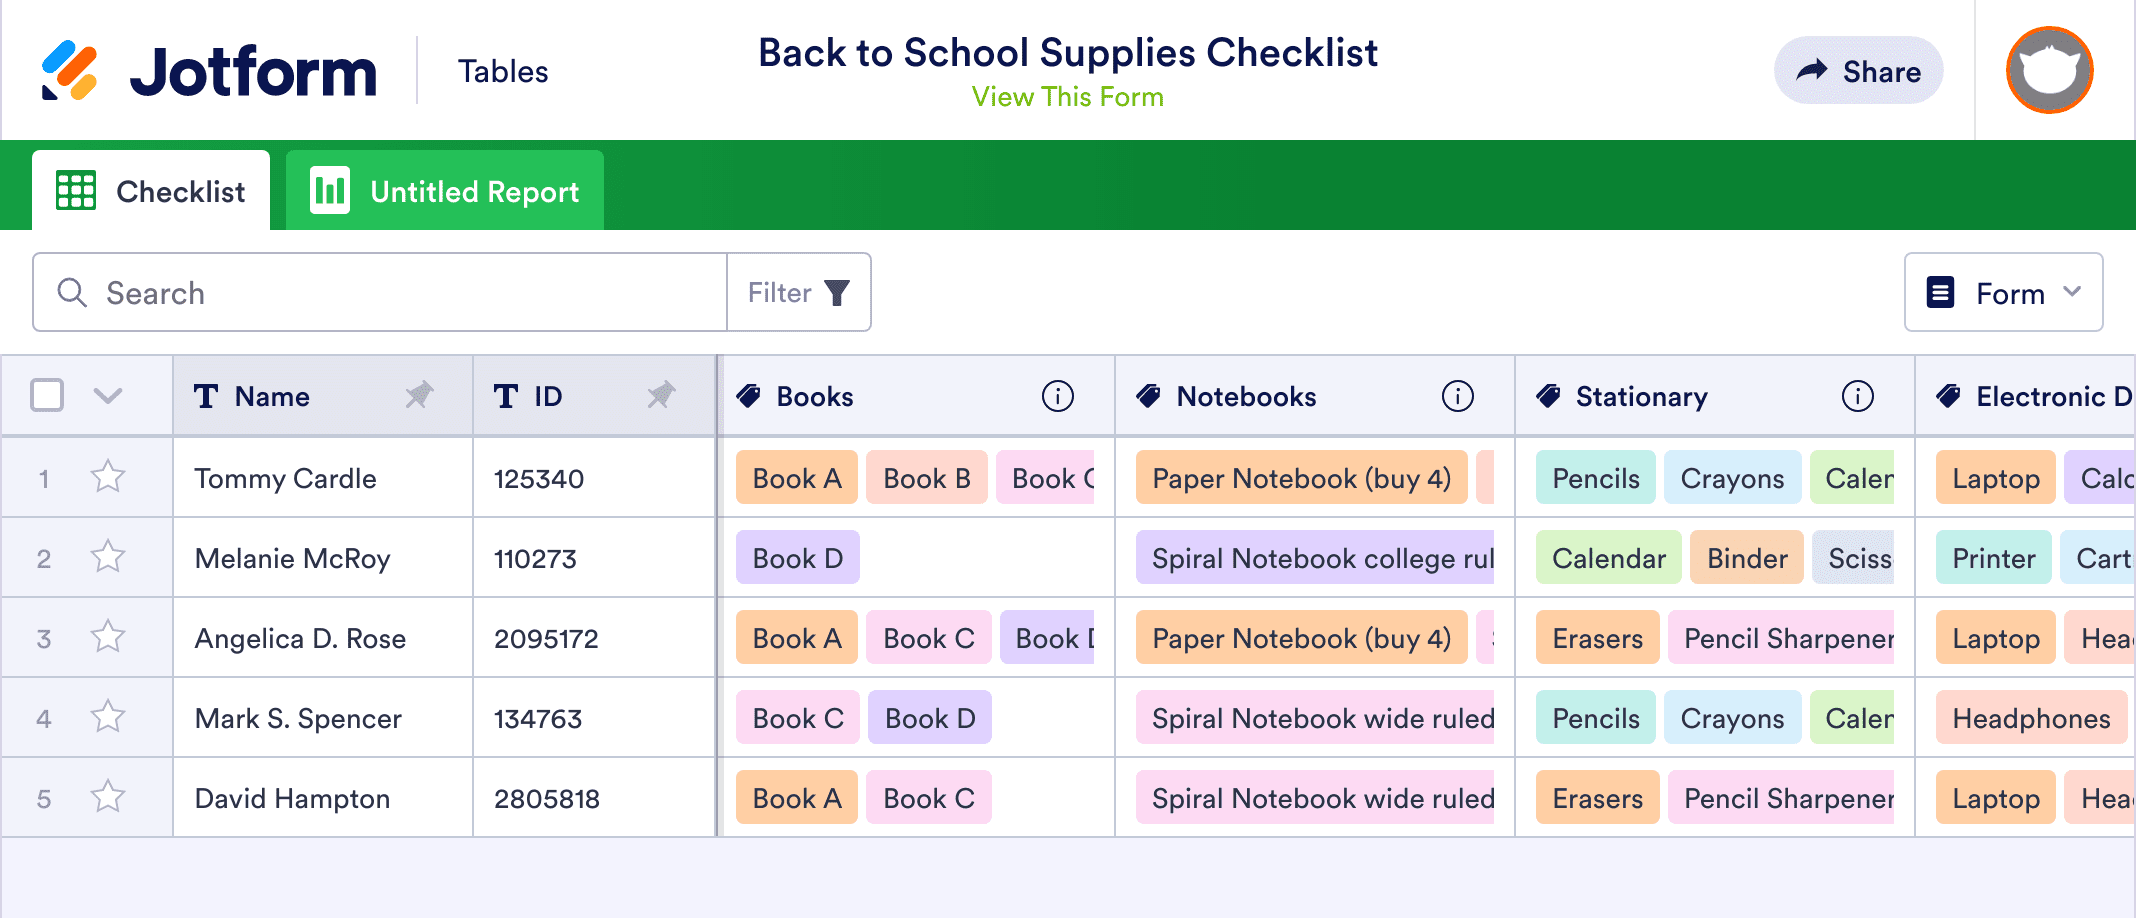 Back to School Supplies Checklist